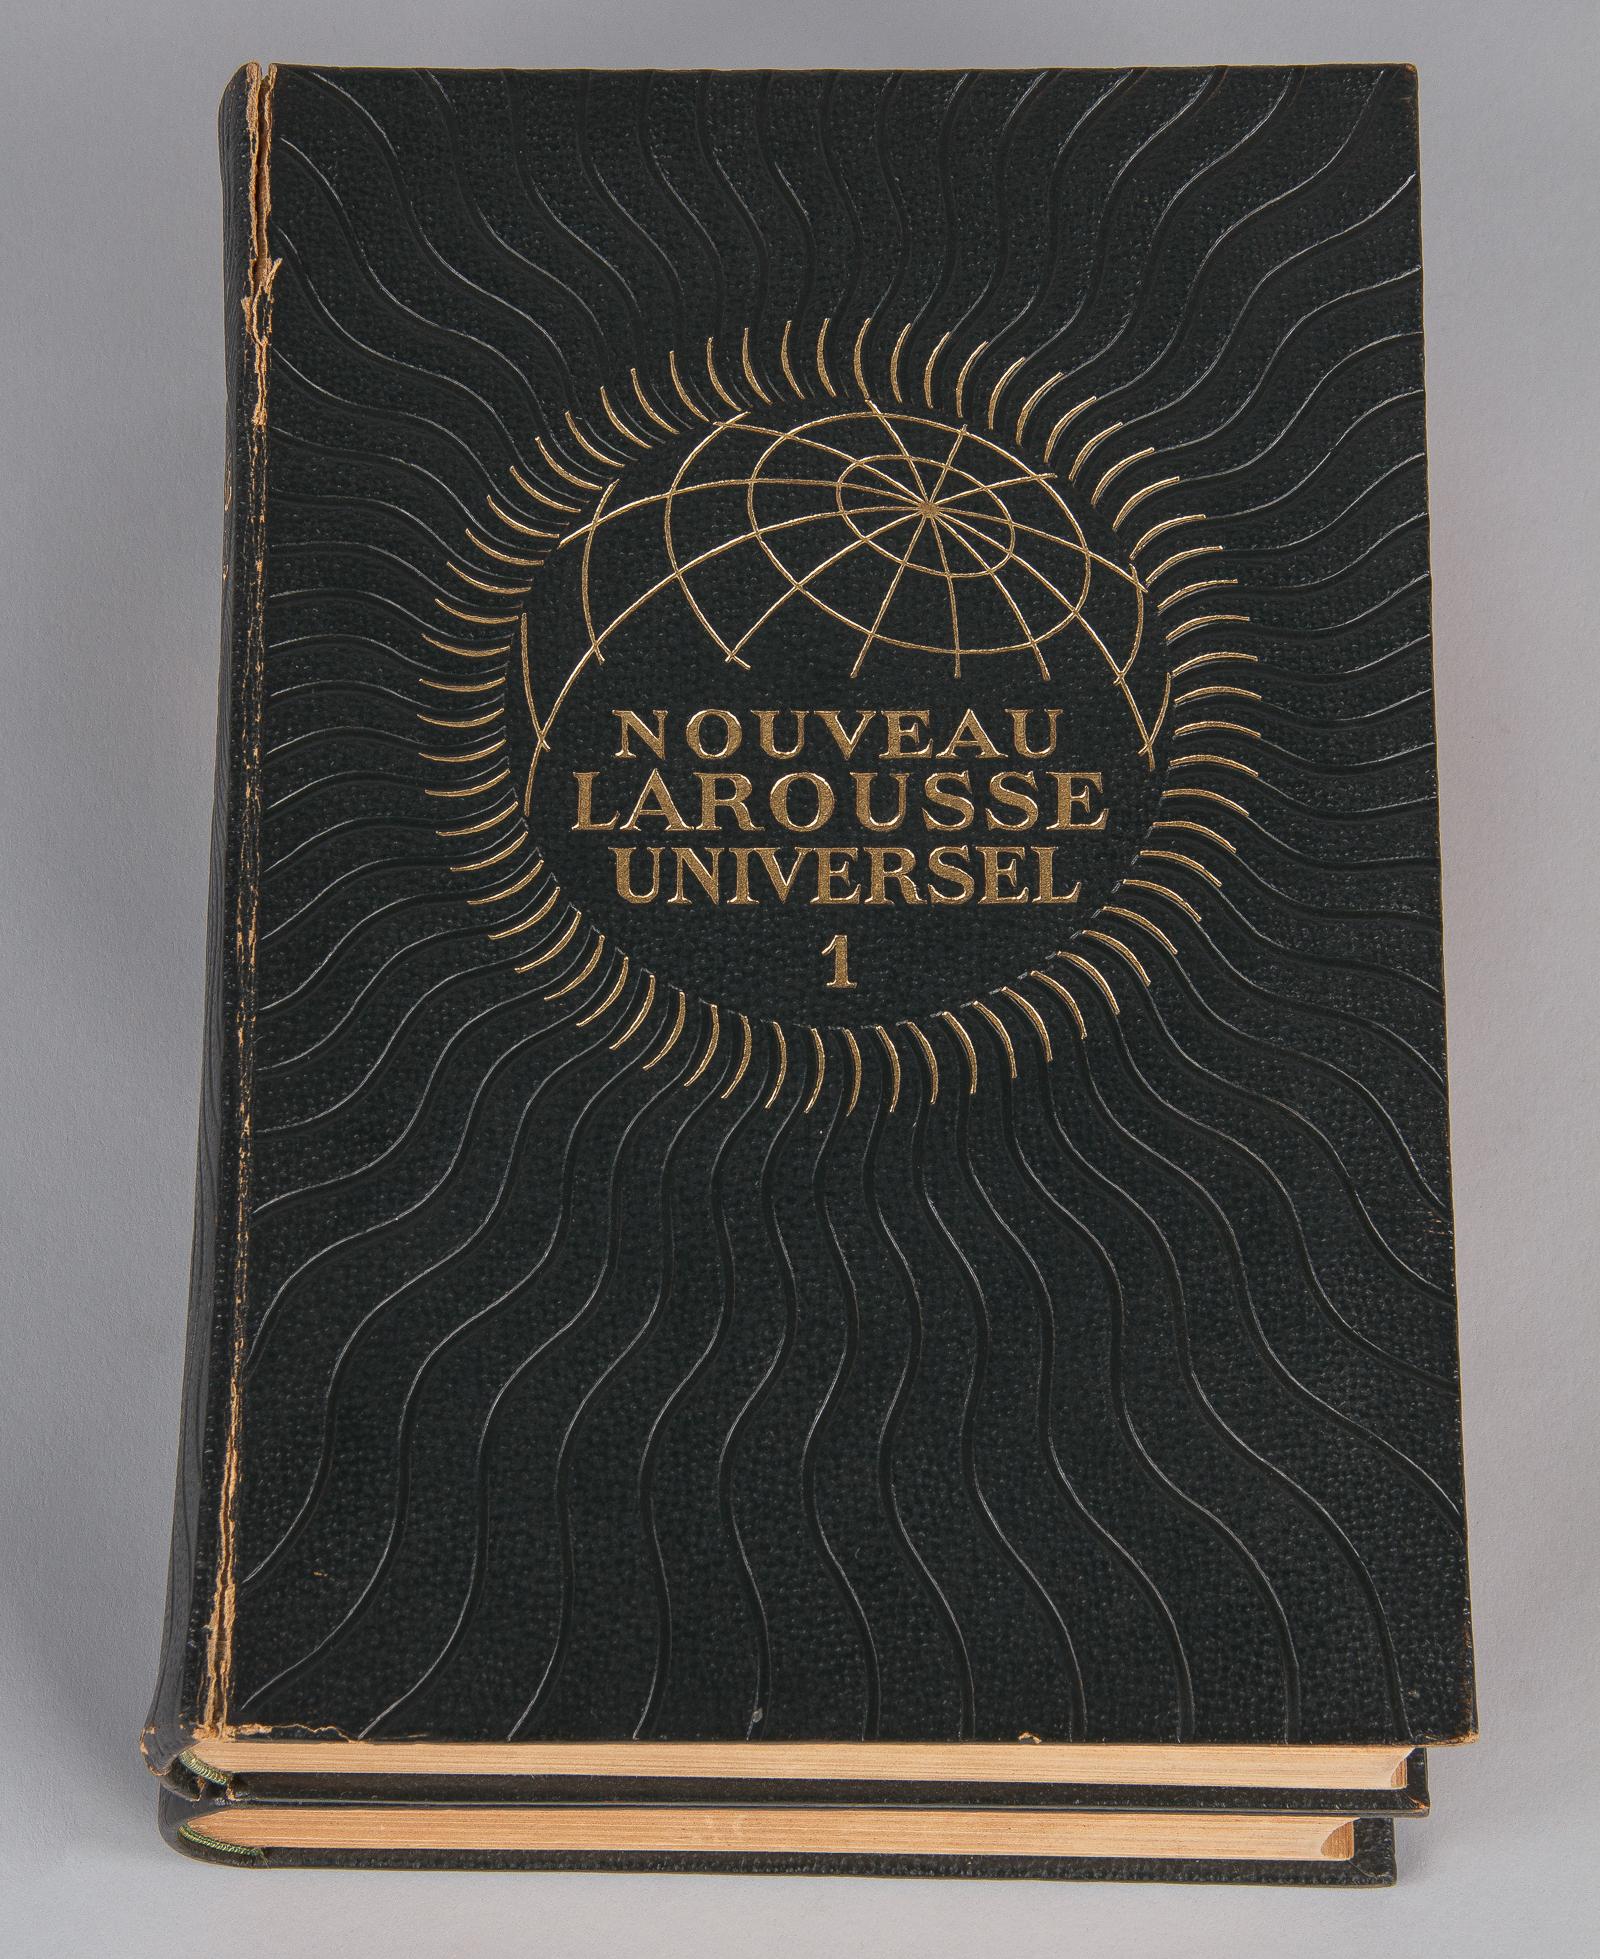 ulysse universel notebook cover